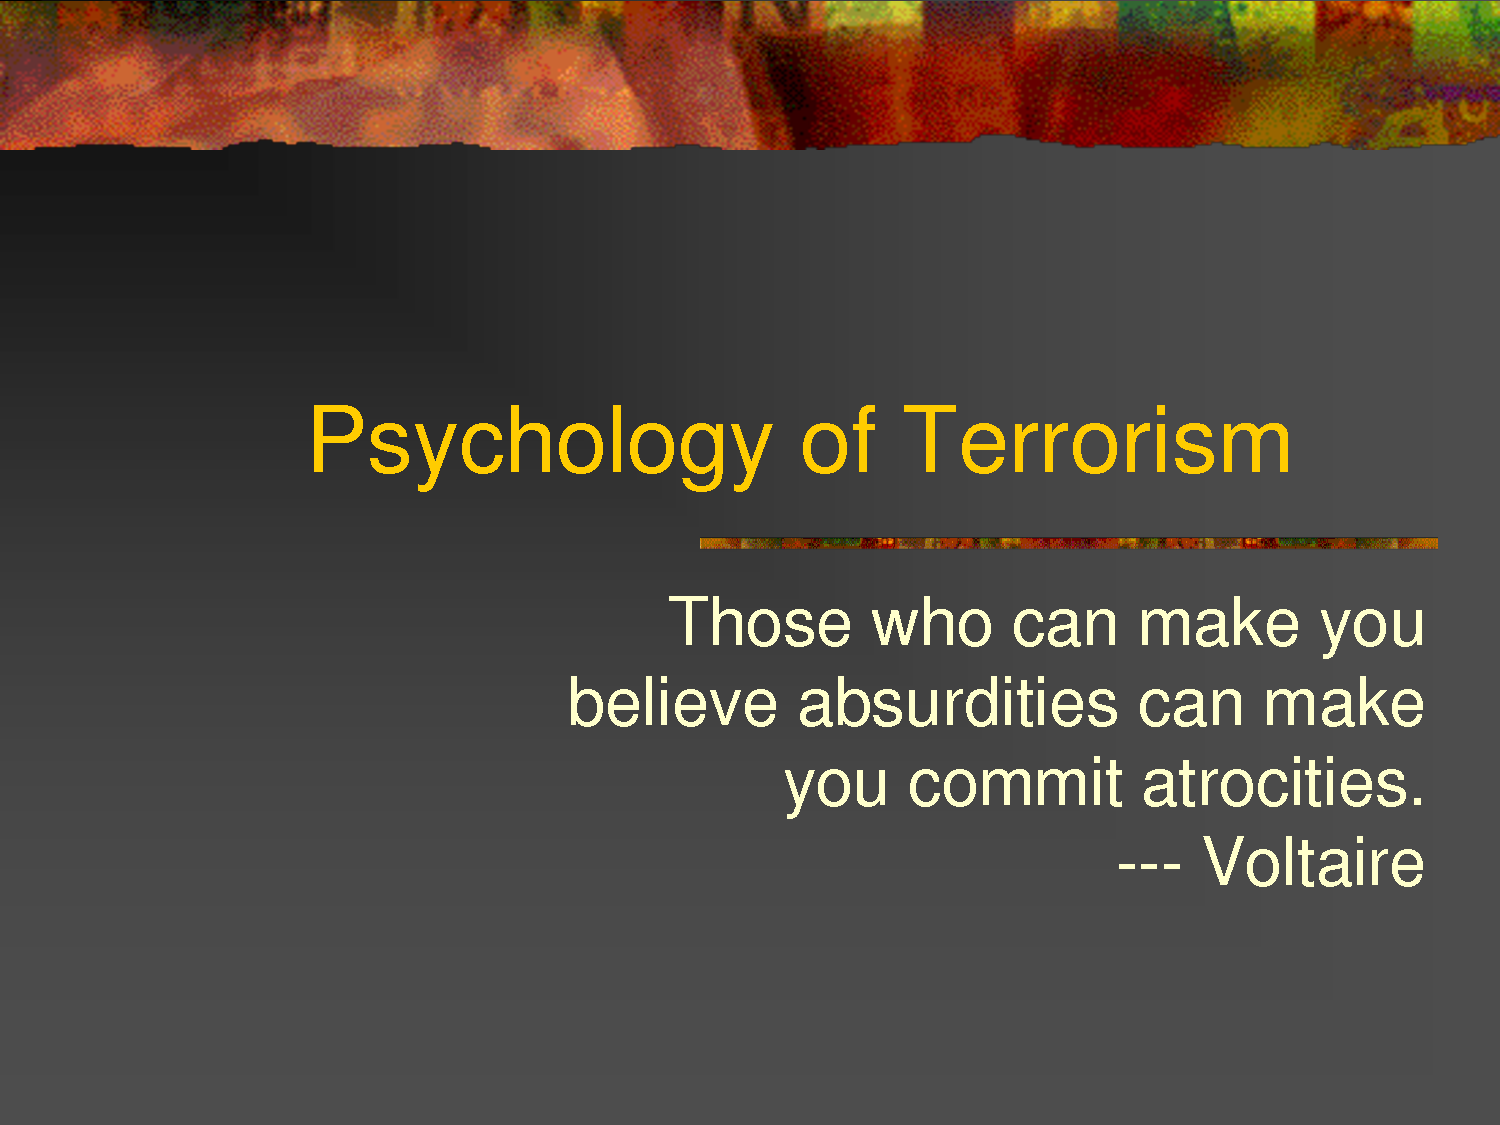 Terrorism expert speaks on psychology of suicide bombers